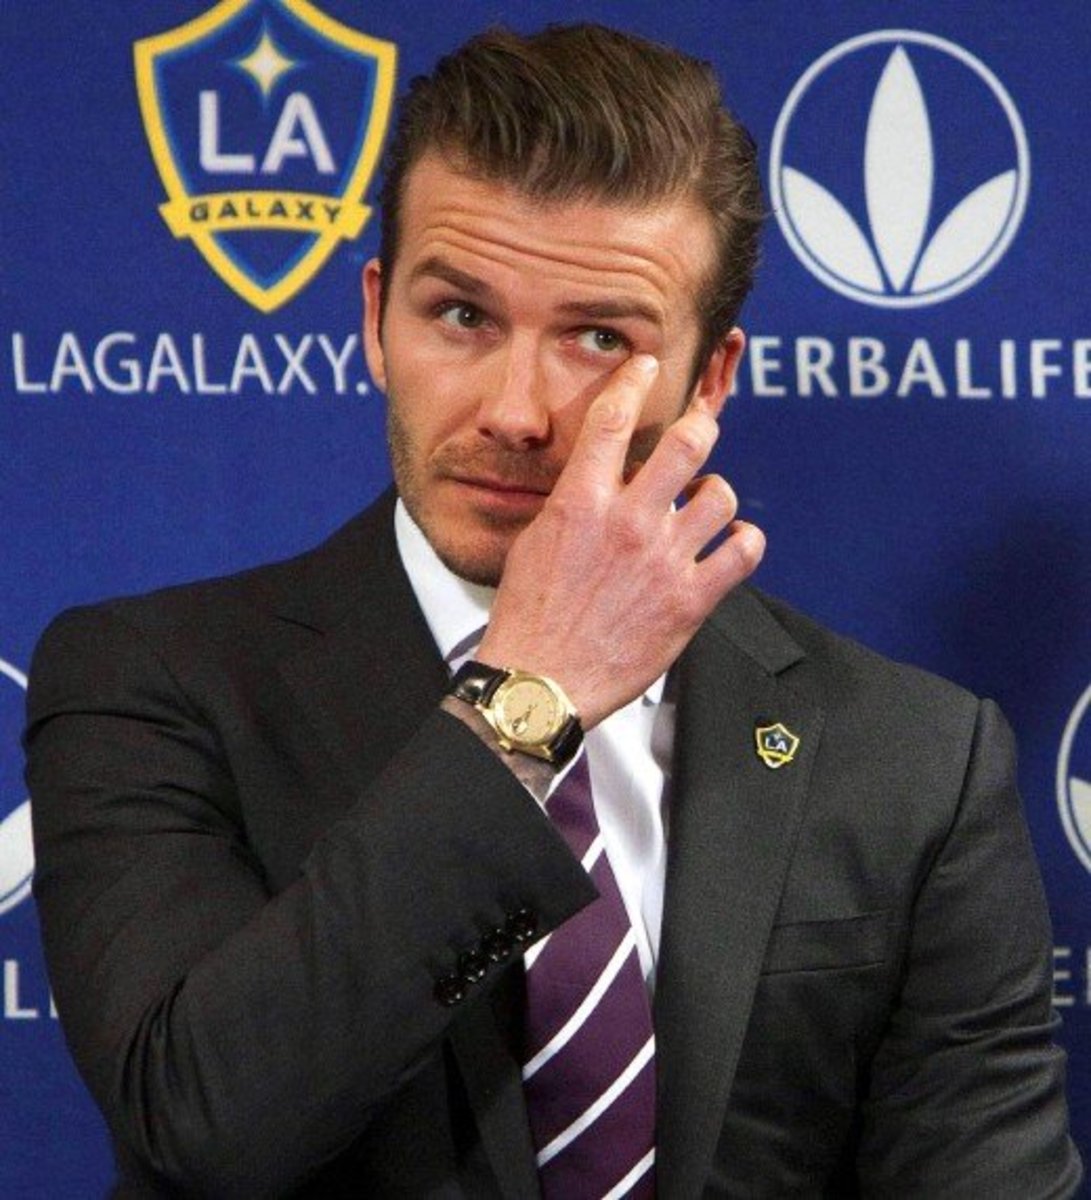 David Beckham's Top 5 Watches